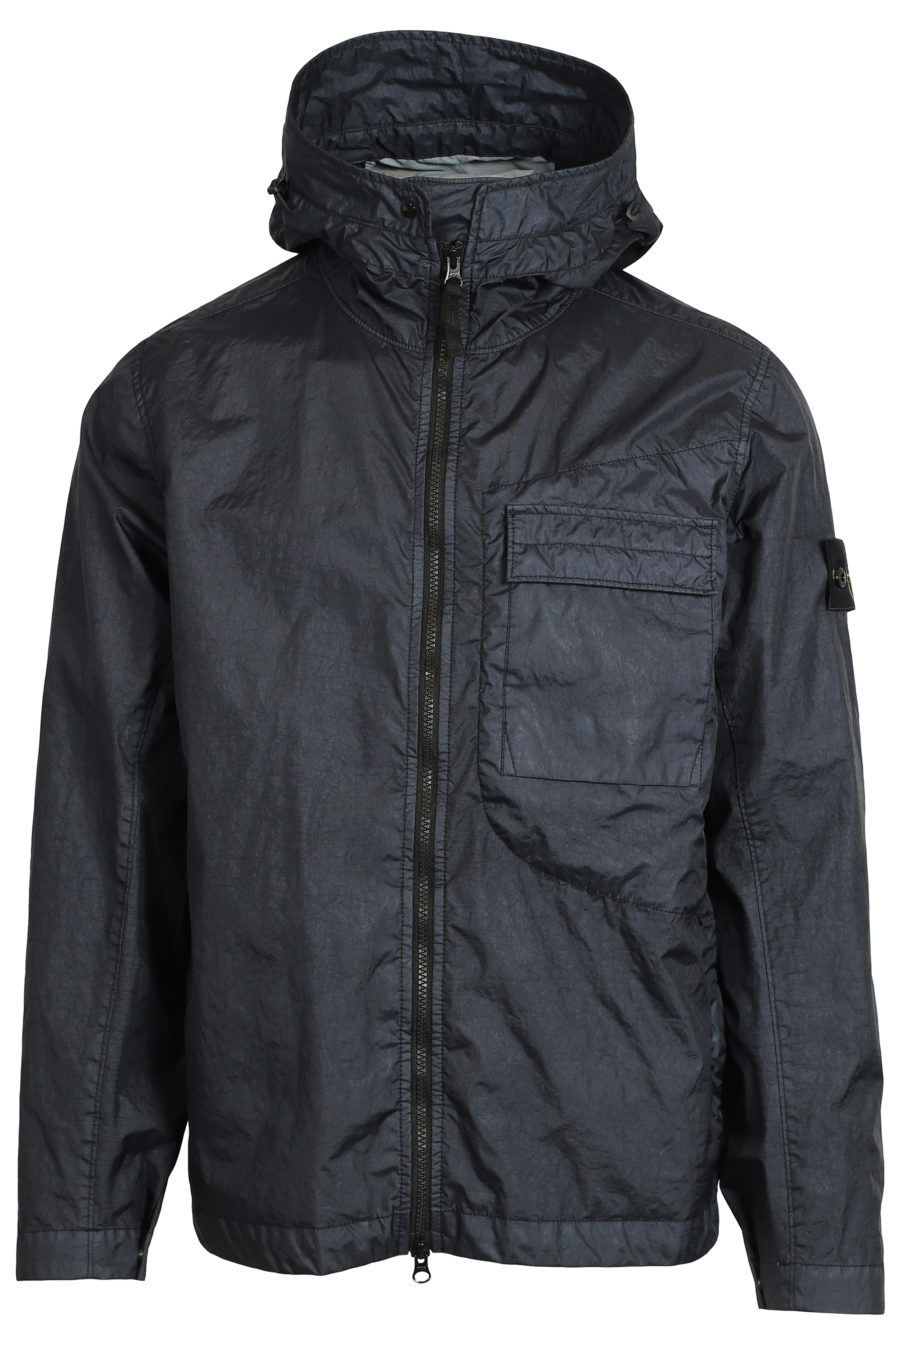 Blue jacket with hood - IMG 3692